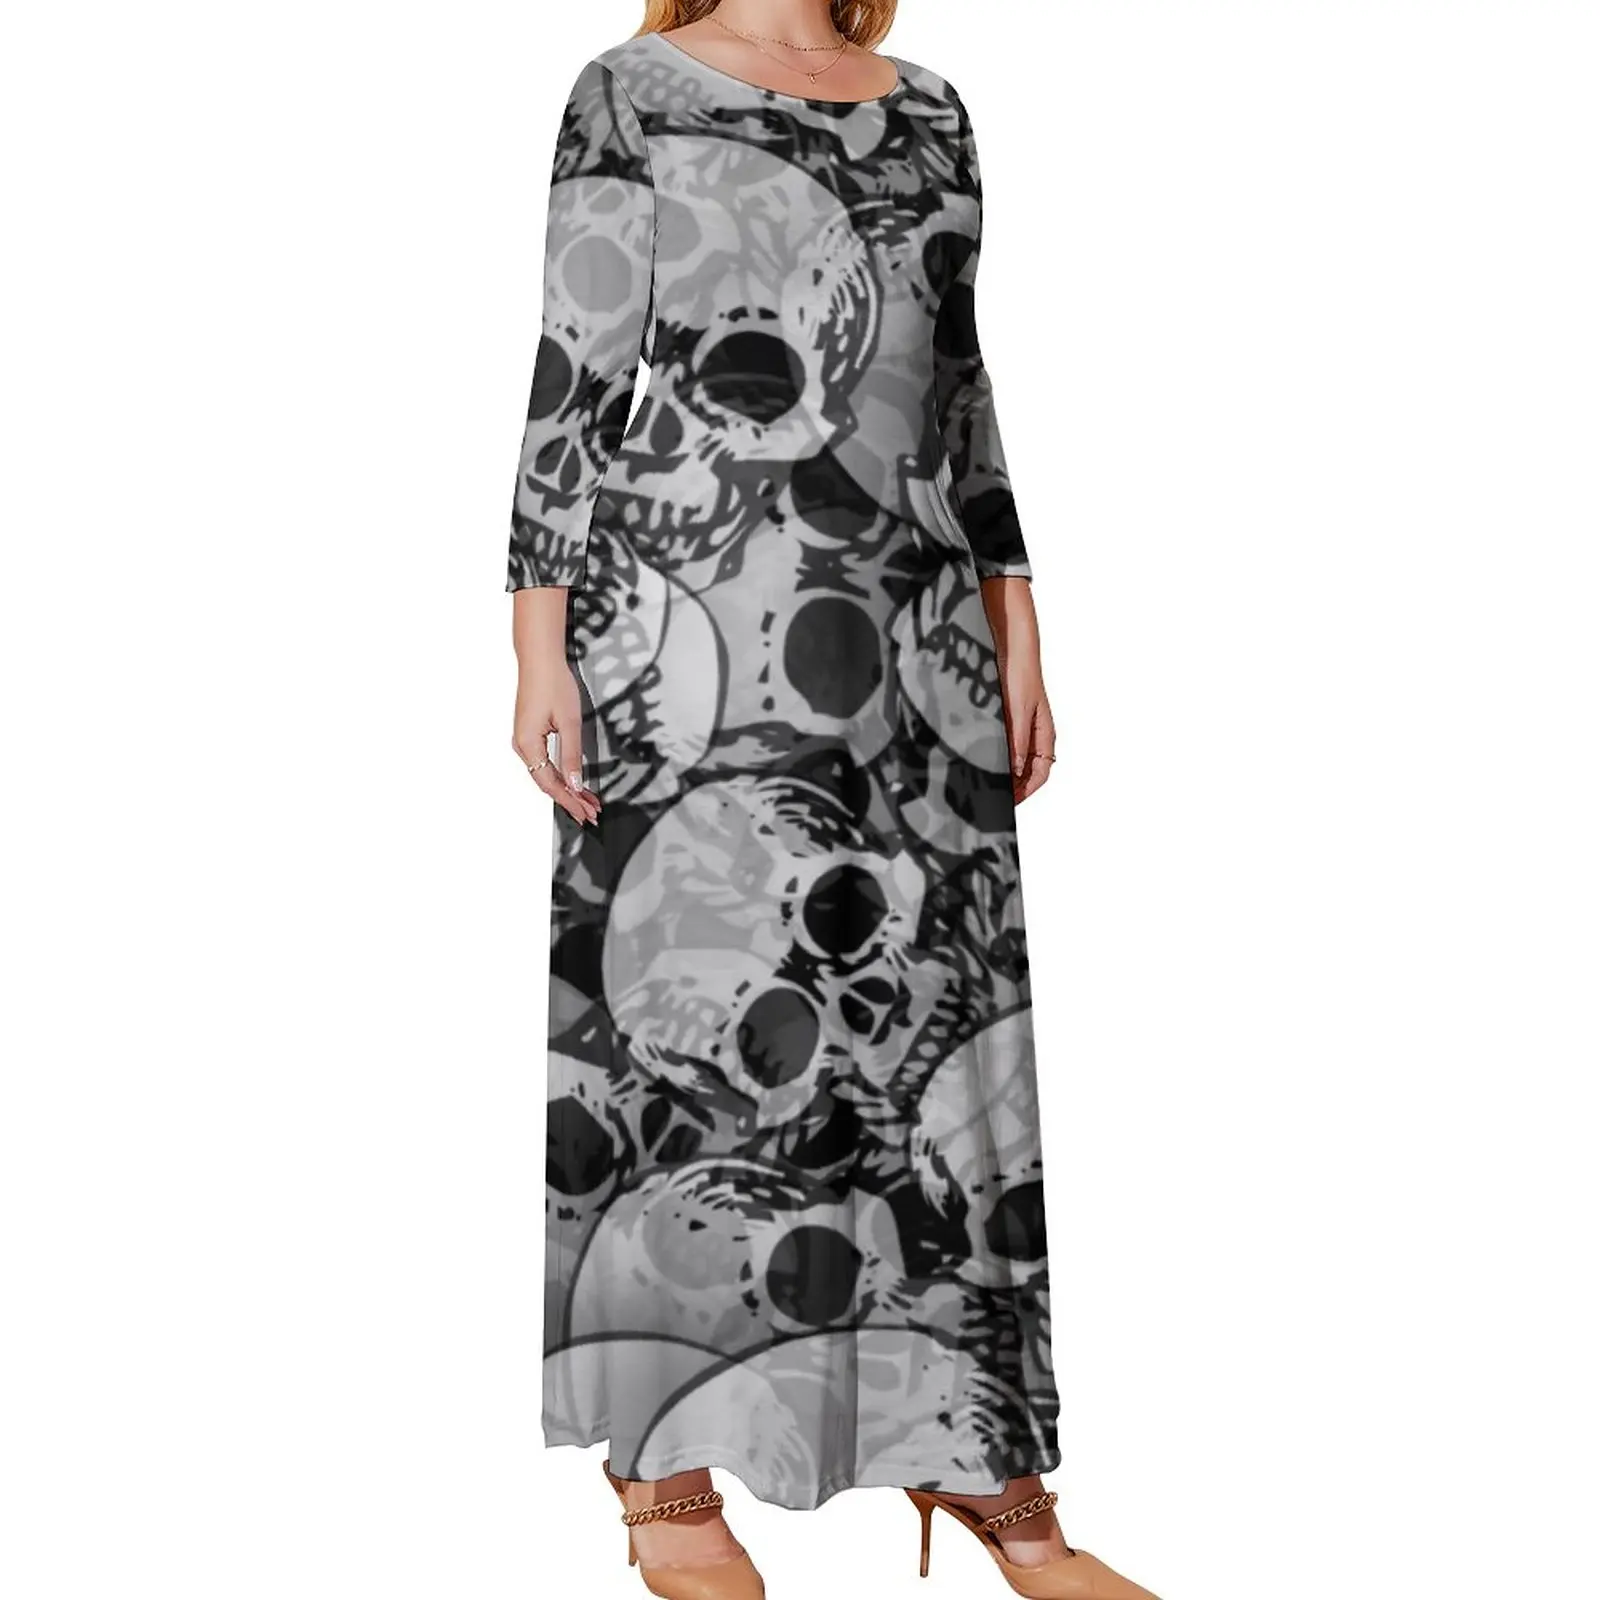 Spooky Halloween Ghost Dress Long-Sleeve Skulls Print Kawaii Maxi Dress Daily Street Wear Beach Long Dresses Plus Size 4XL 5XL